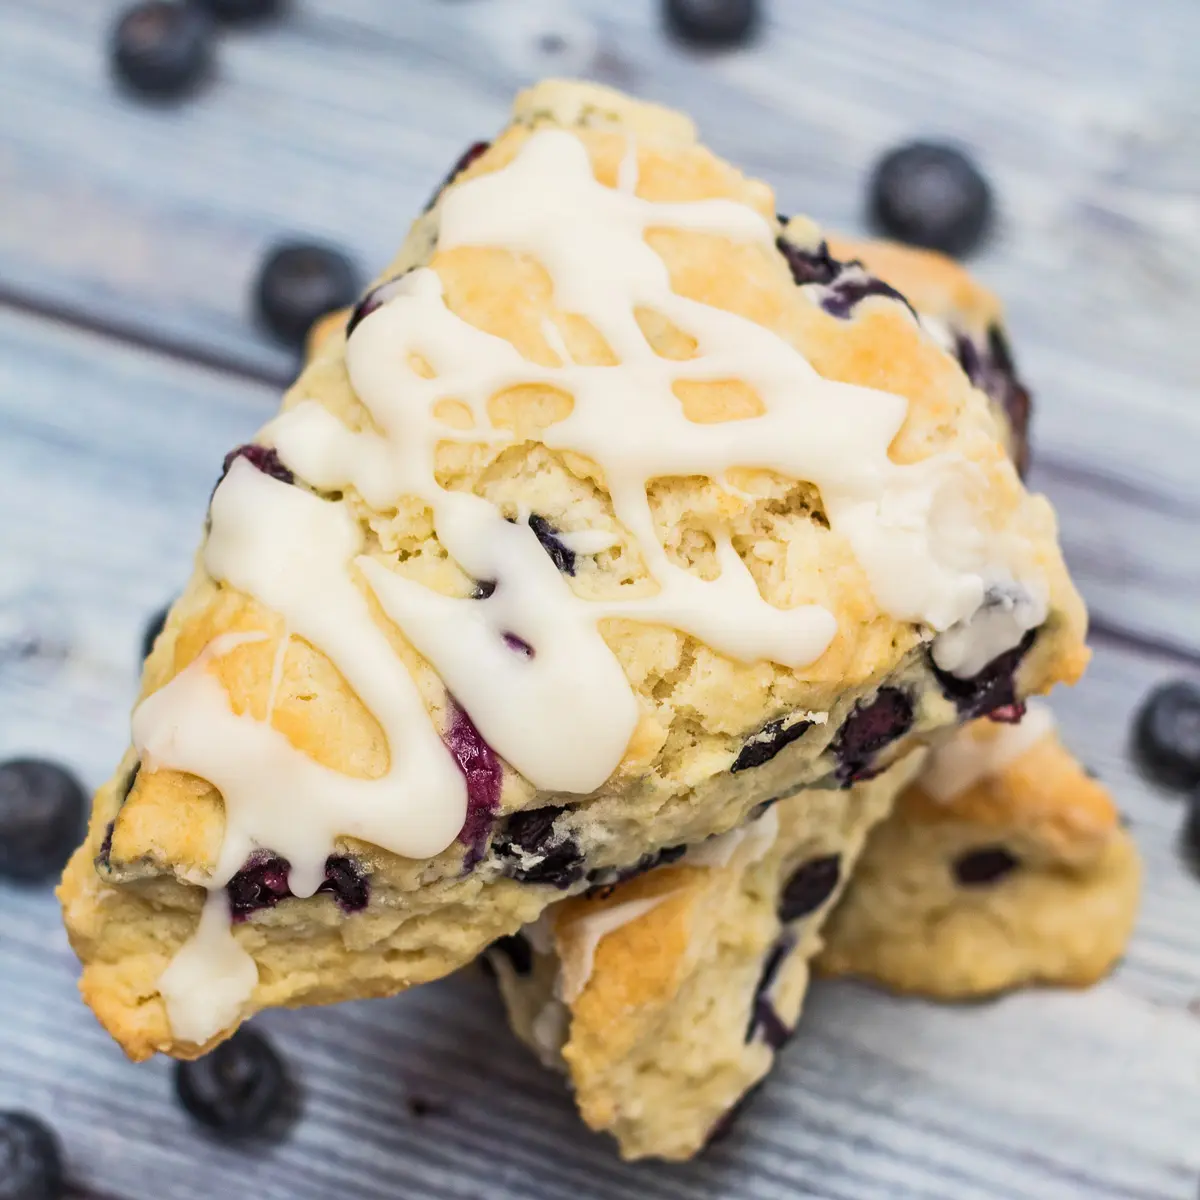 Blueberry cream cheese scone dengan latar belakang aising dan blueberry.